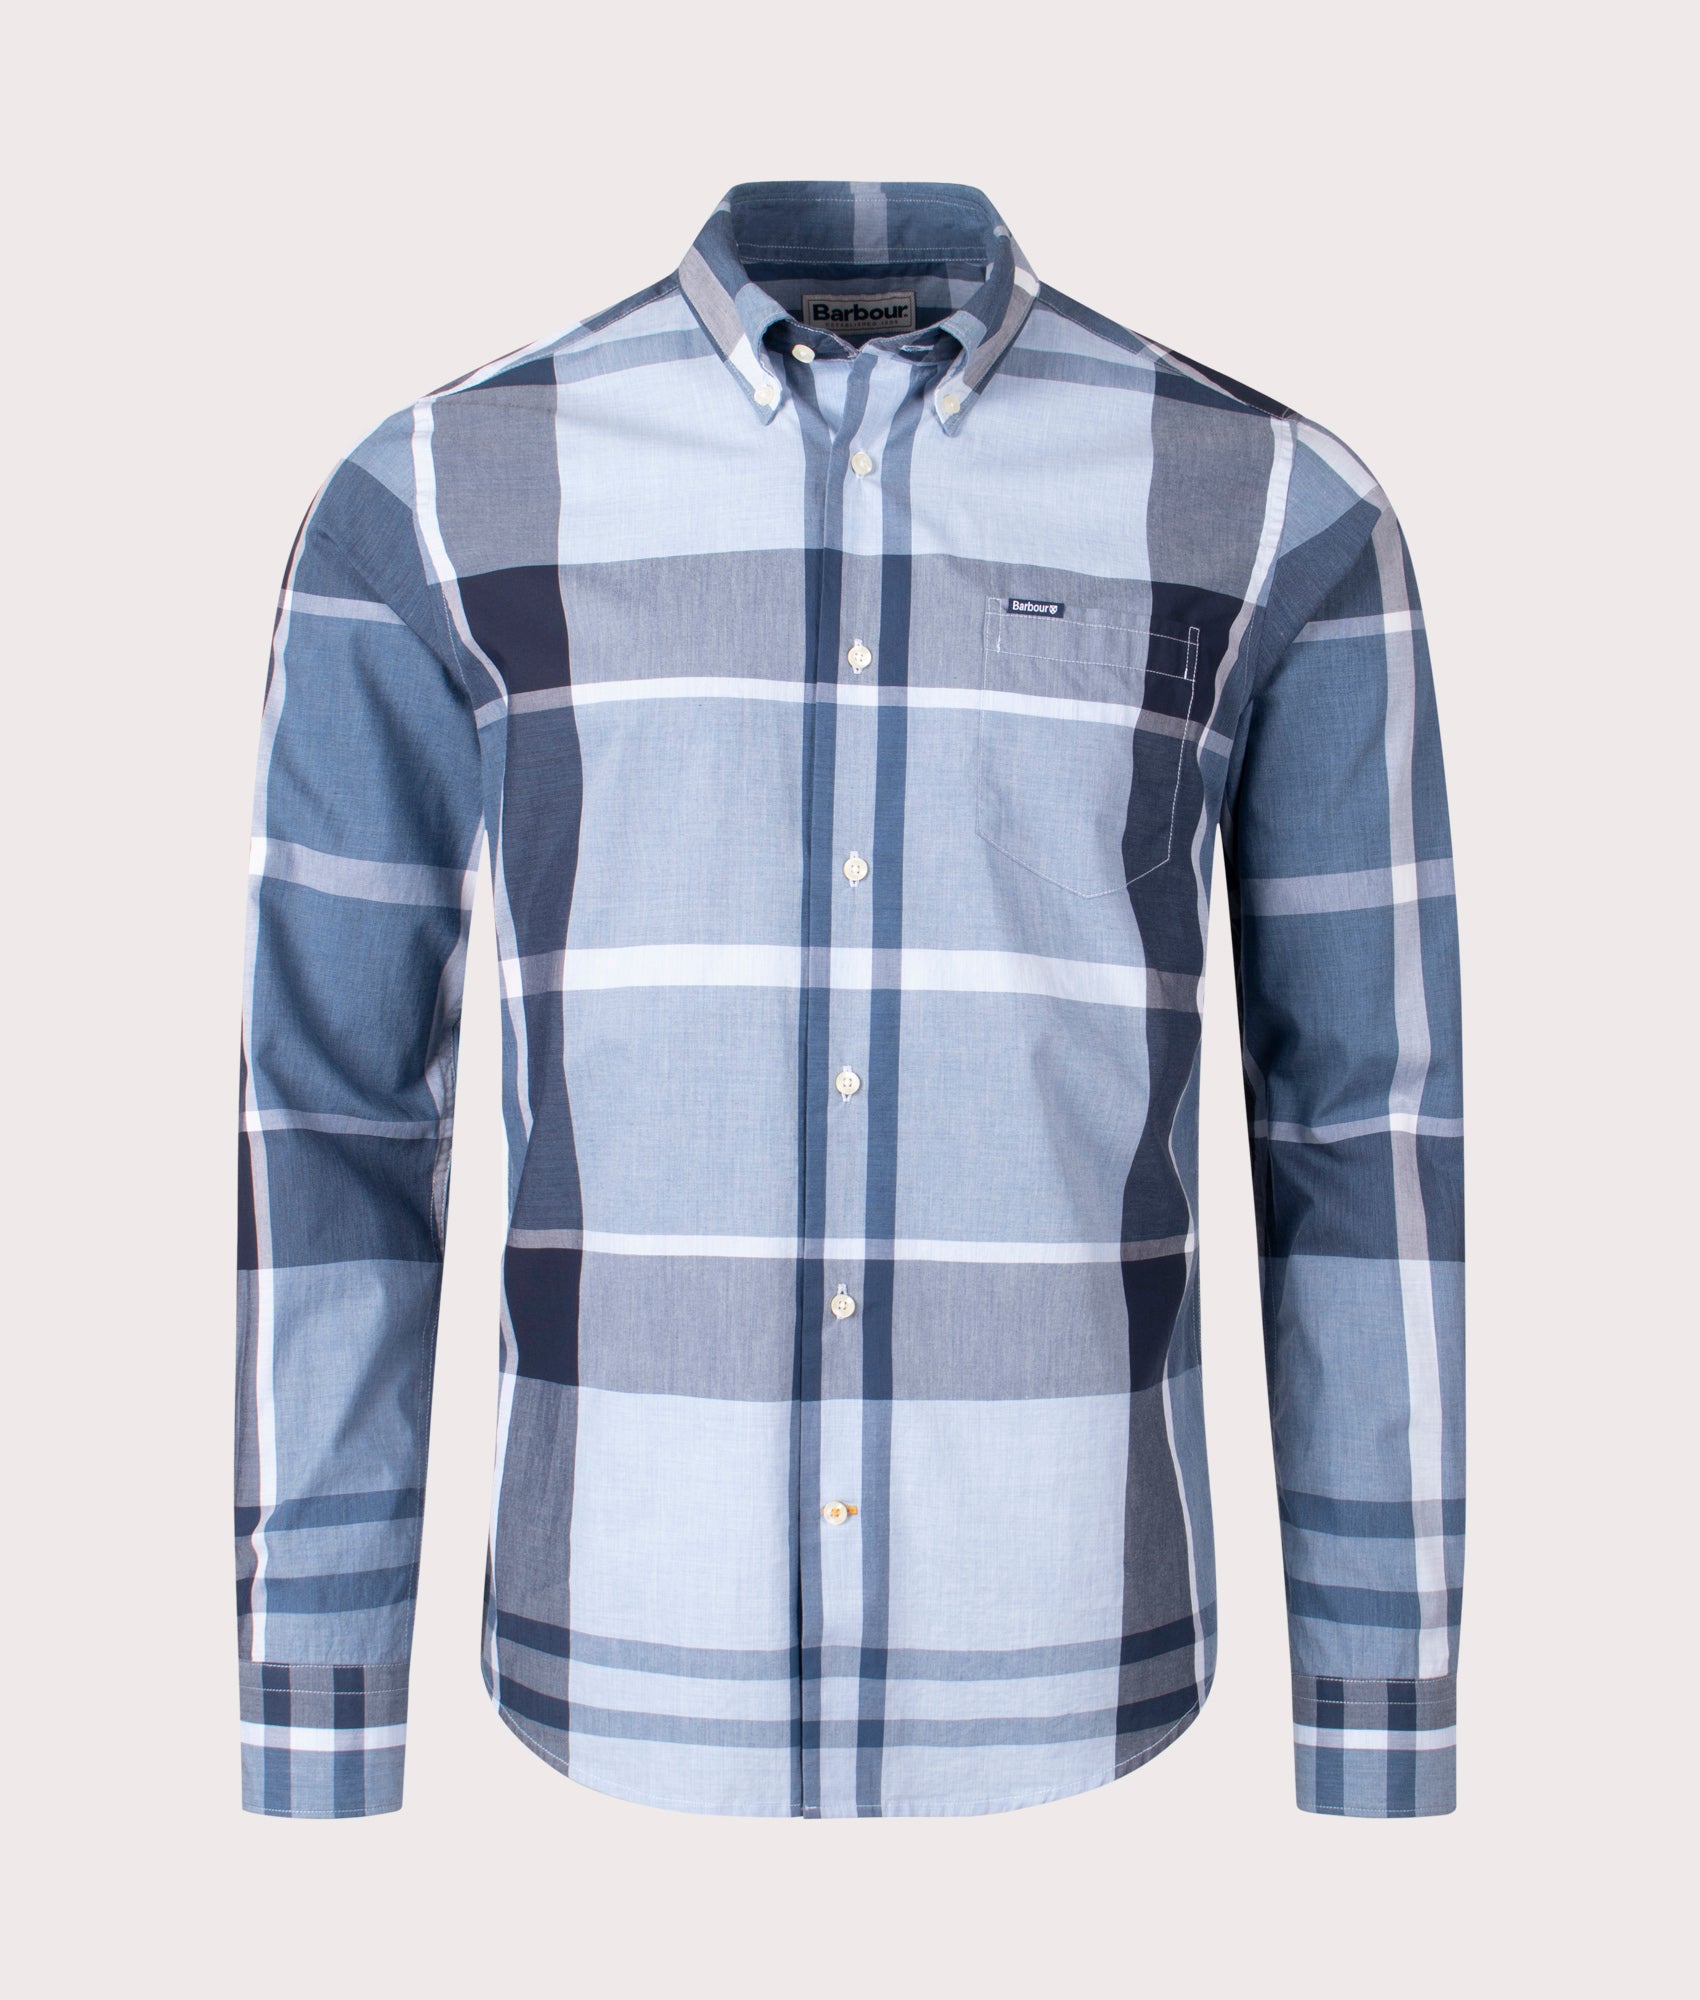 Barbour Lifestyle Mens Harris Shirt Tailored Shirt - Colour: TN22 Berwick Blue Tartan - Size: Medium